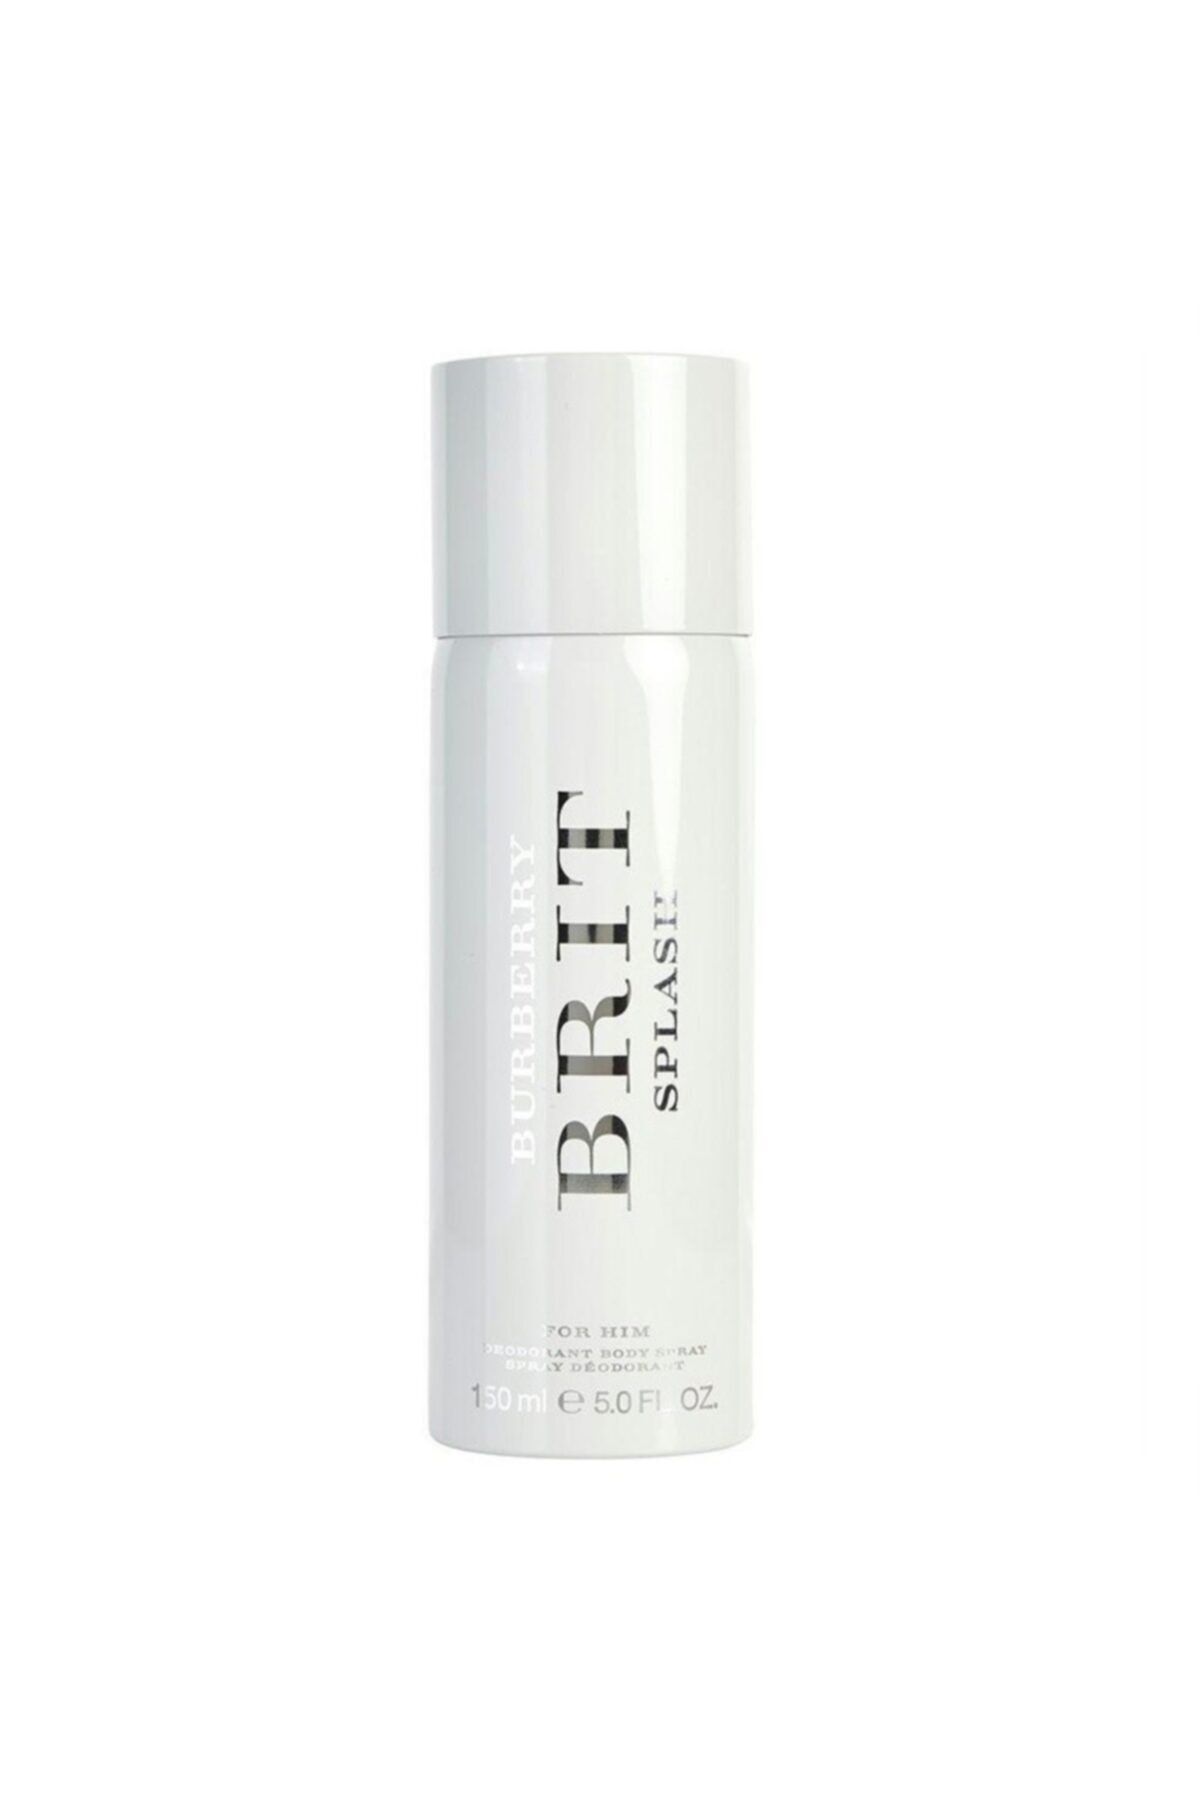 Burberry Brit Splash Deodorant Spray 150ml. 5045456583207